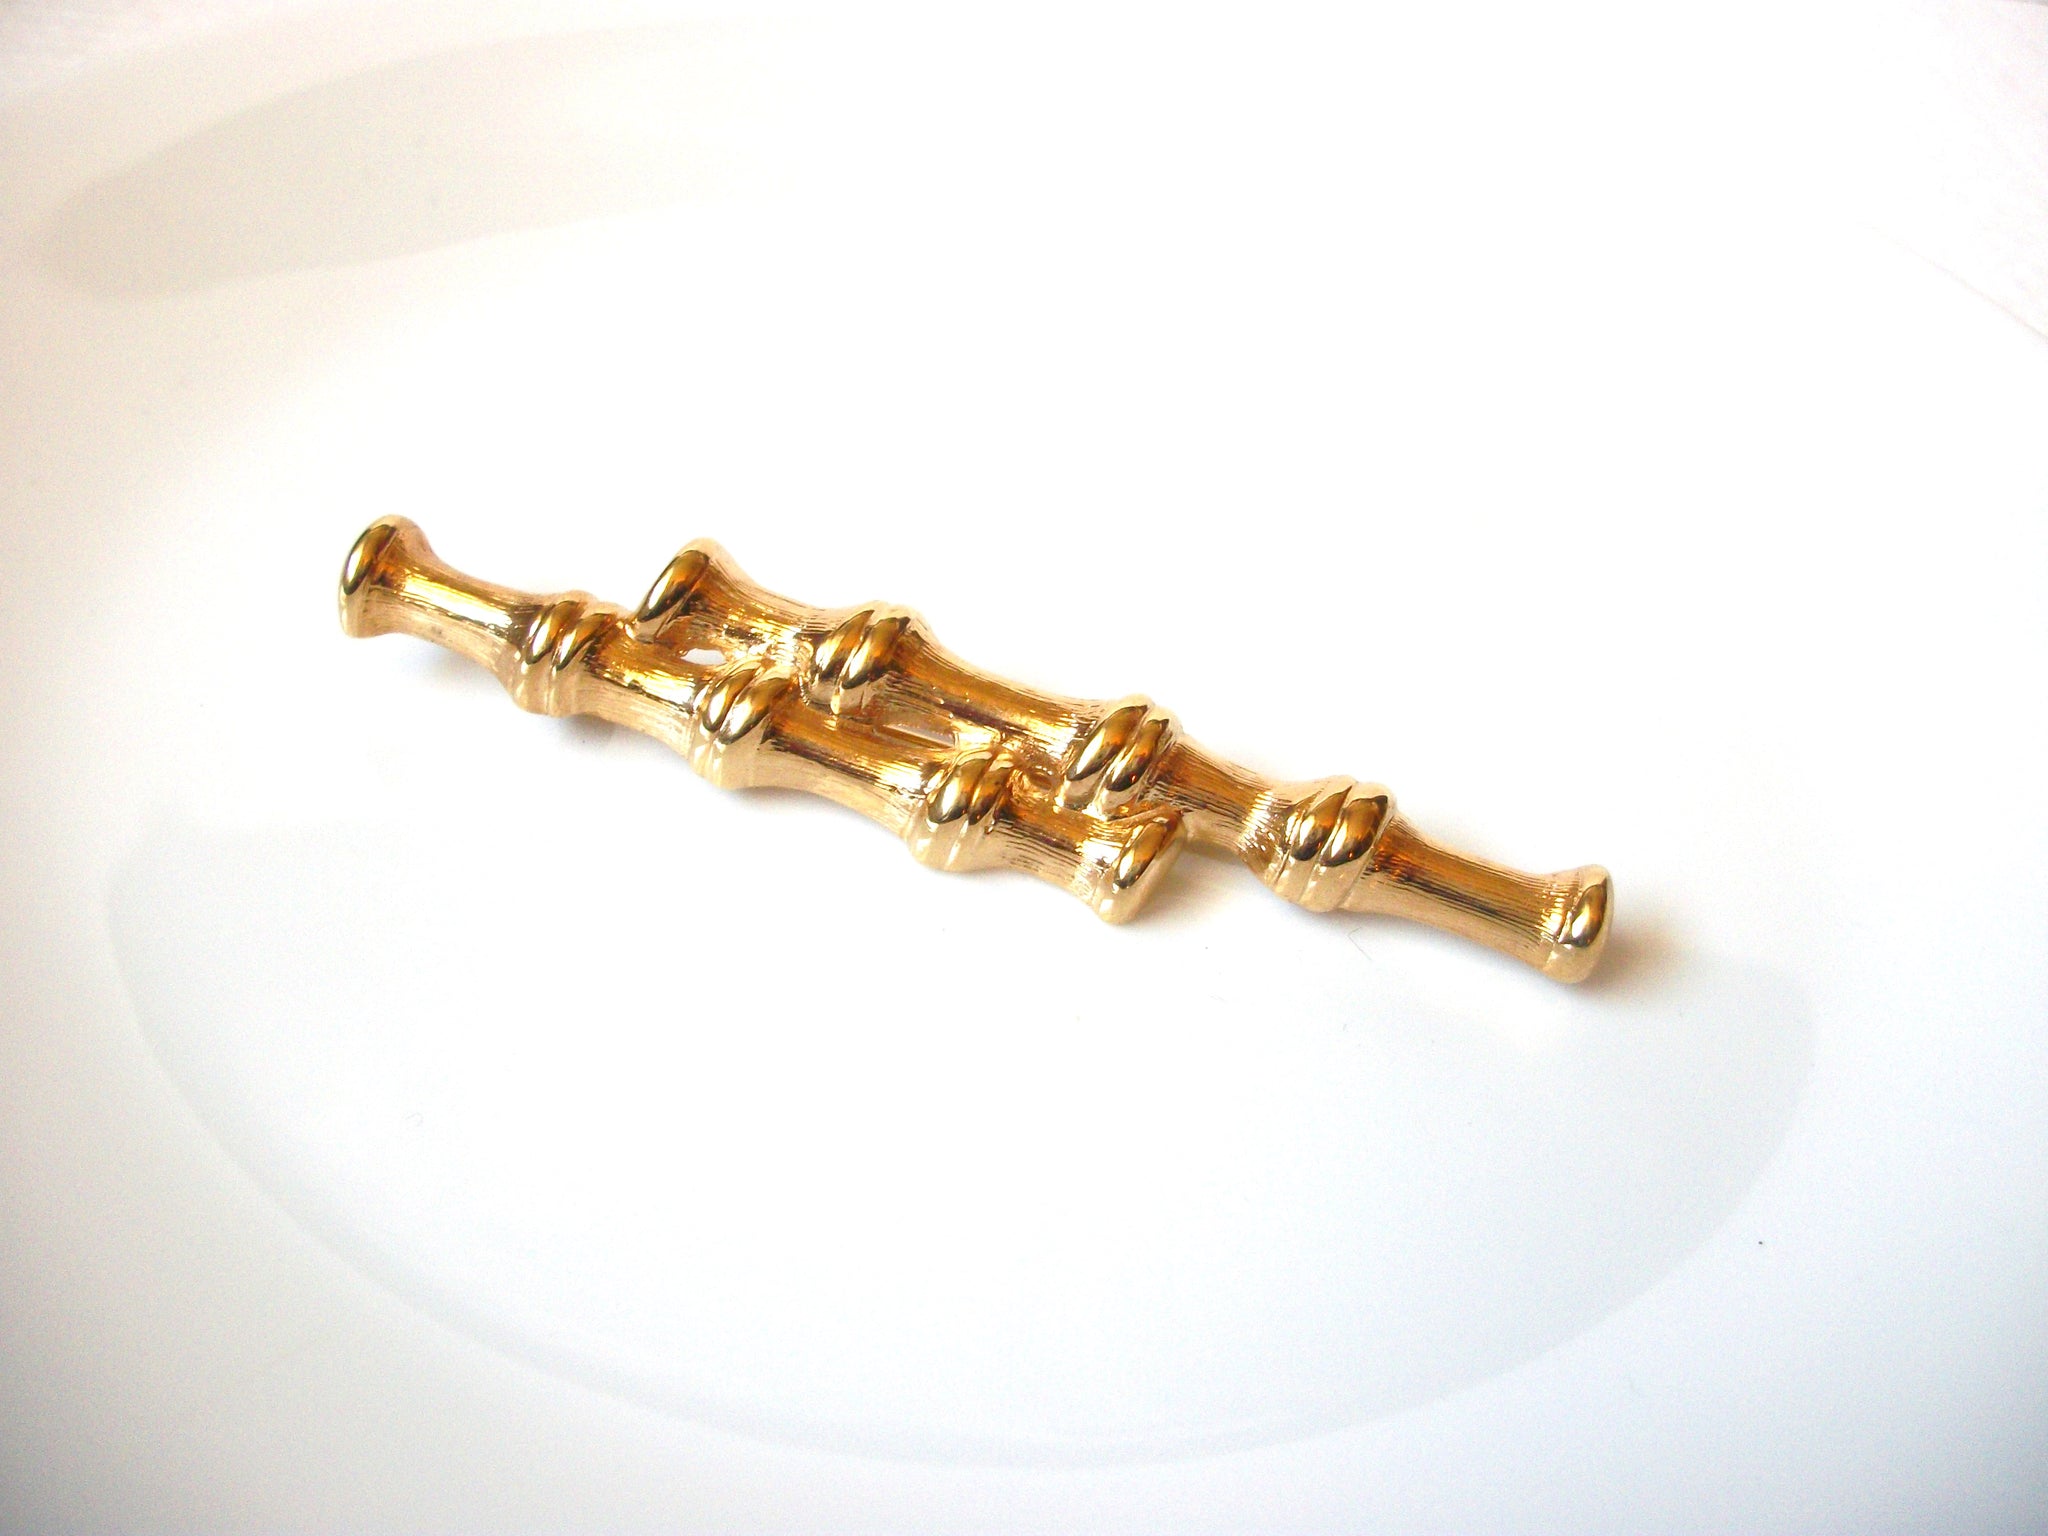 Vintage Gift Worthy MONET Bamboo Image Gold Tone Metal Pin 72518